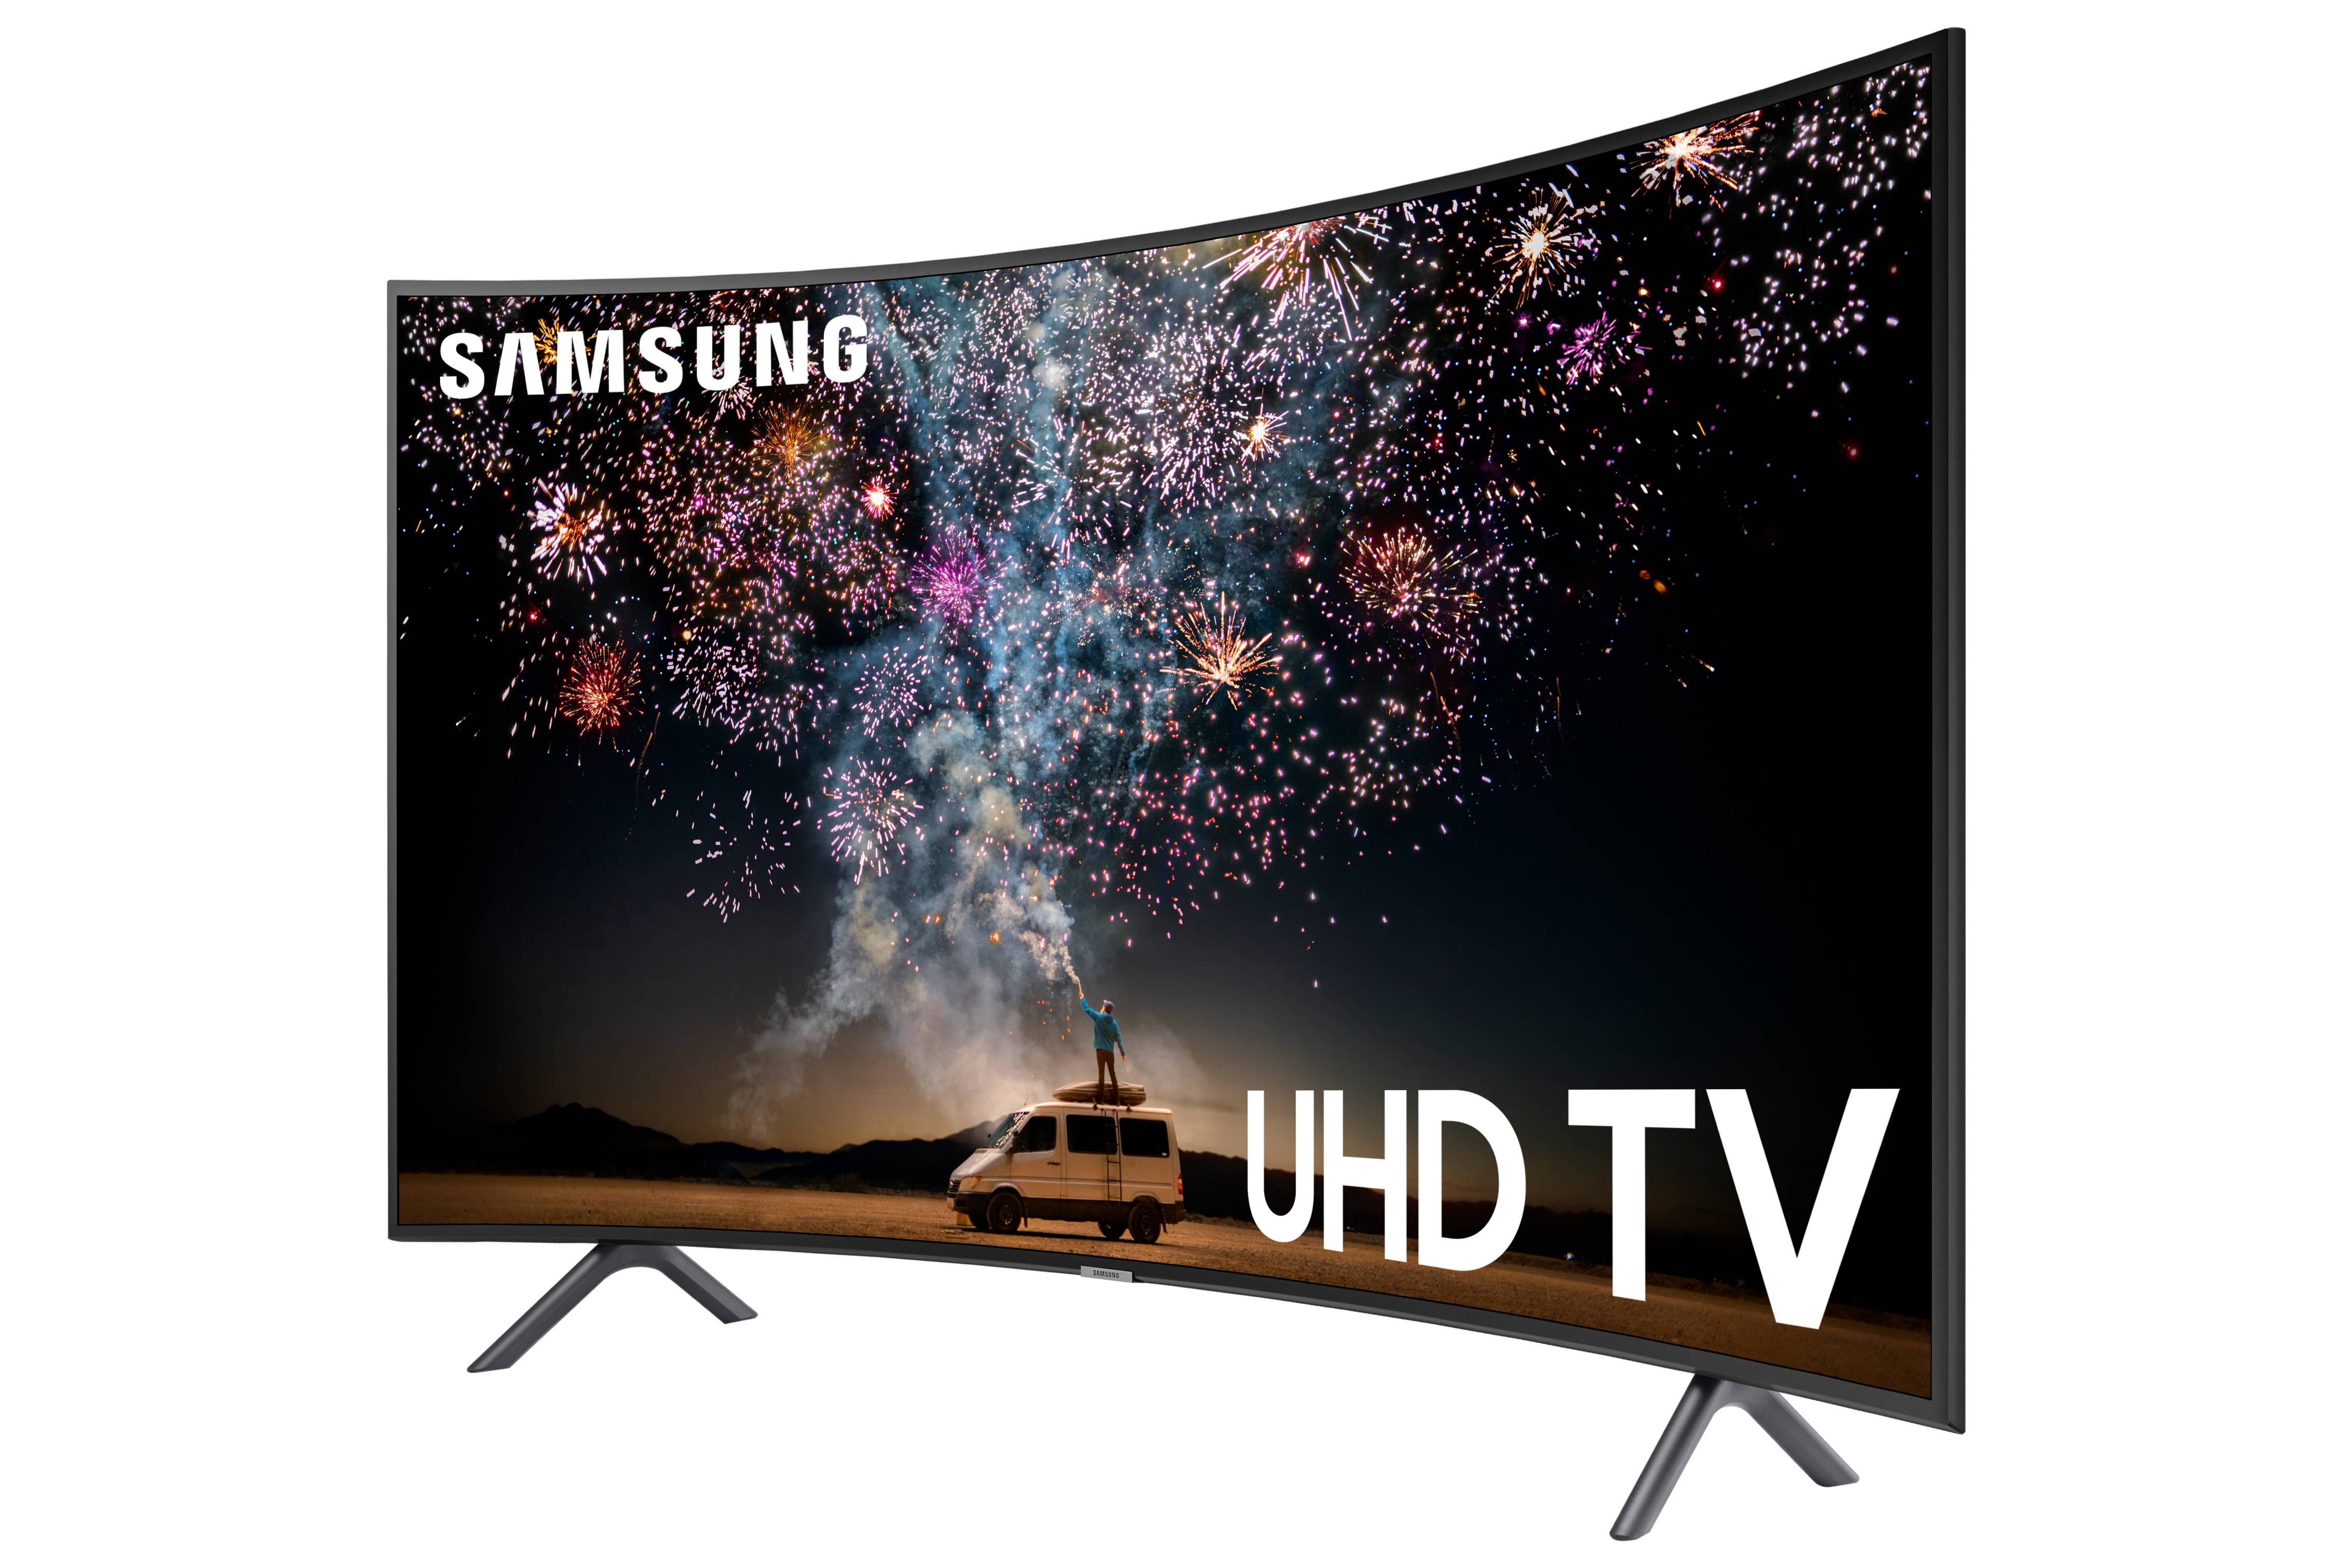 SAMSUNG 55" Class 4K Ultra HD (2160P) HDR Smart LED Curved TV UN55RU7300 (2019 Model) - image 5 of 12